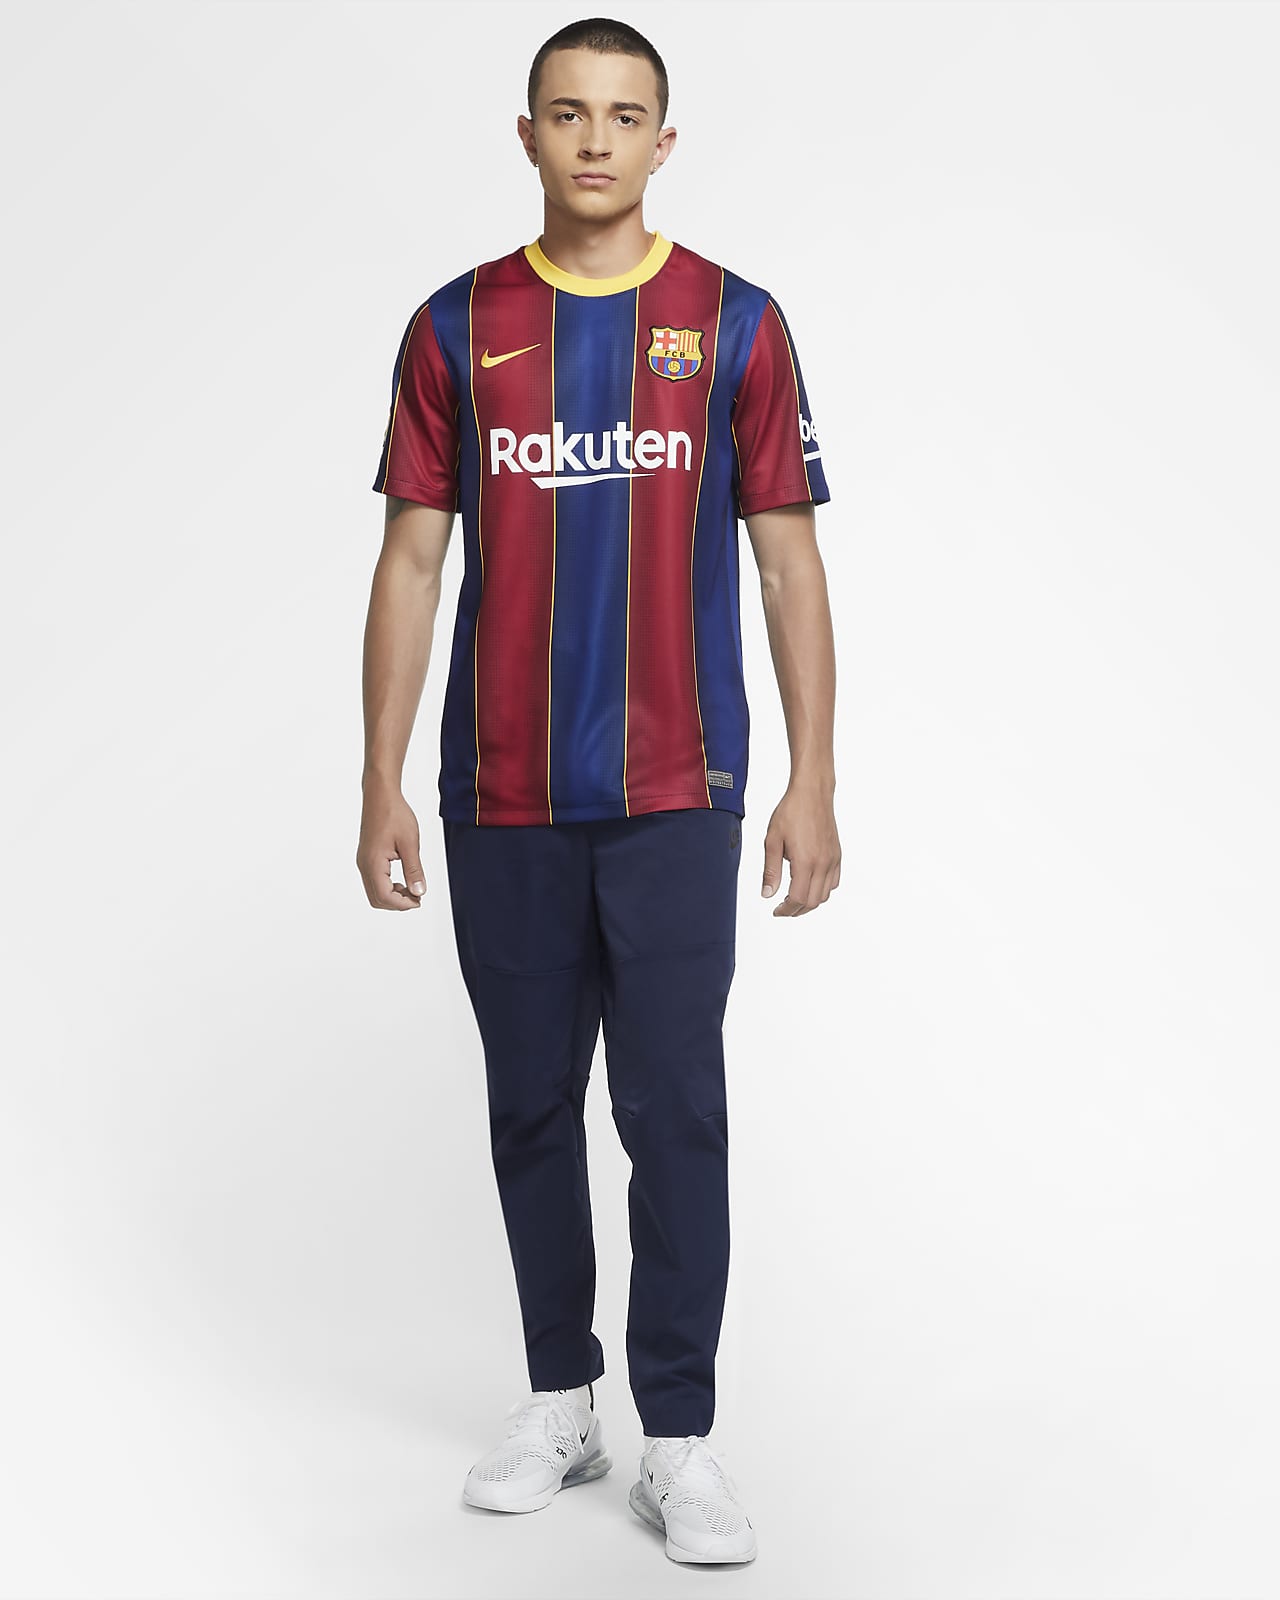 30+ Fc Barcelona Uniform 2020 Images - Toucan Wallpaper